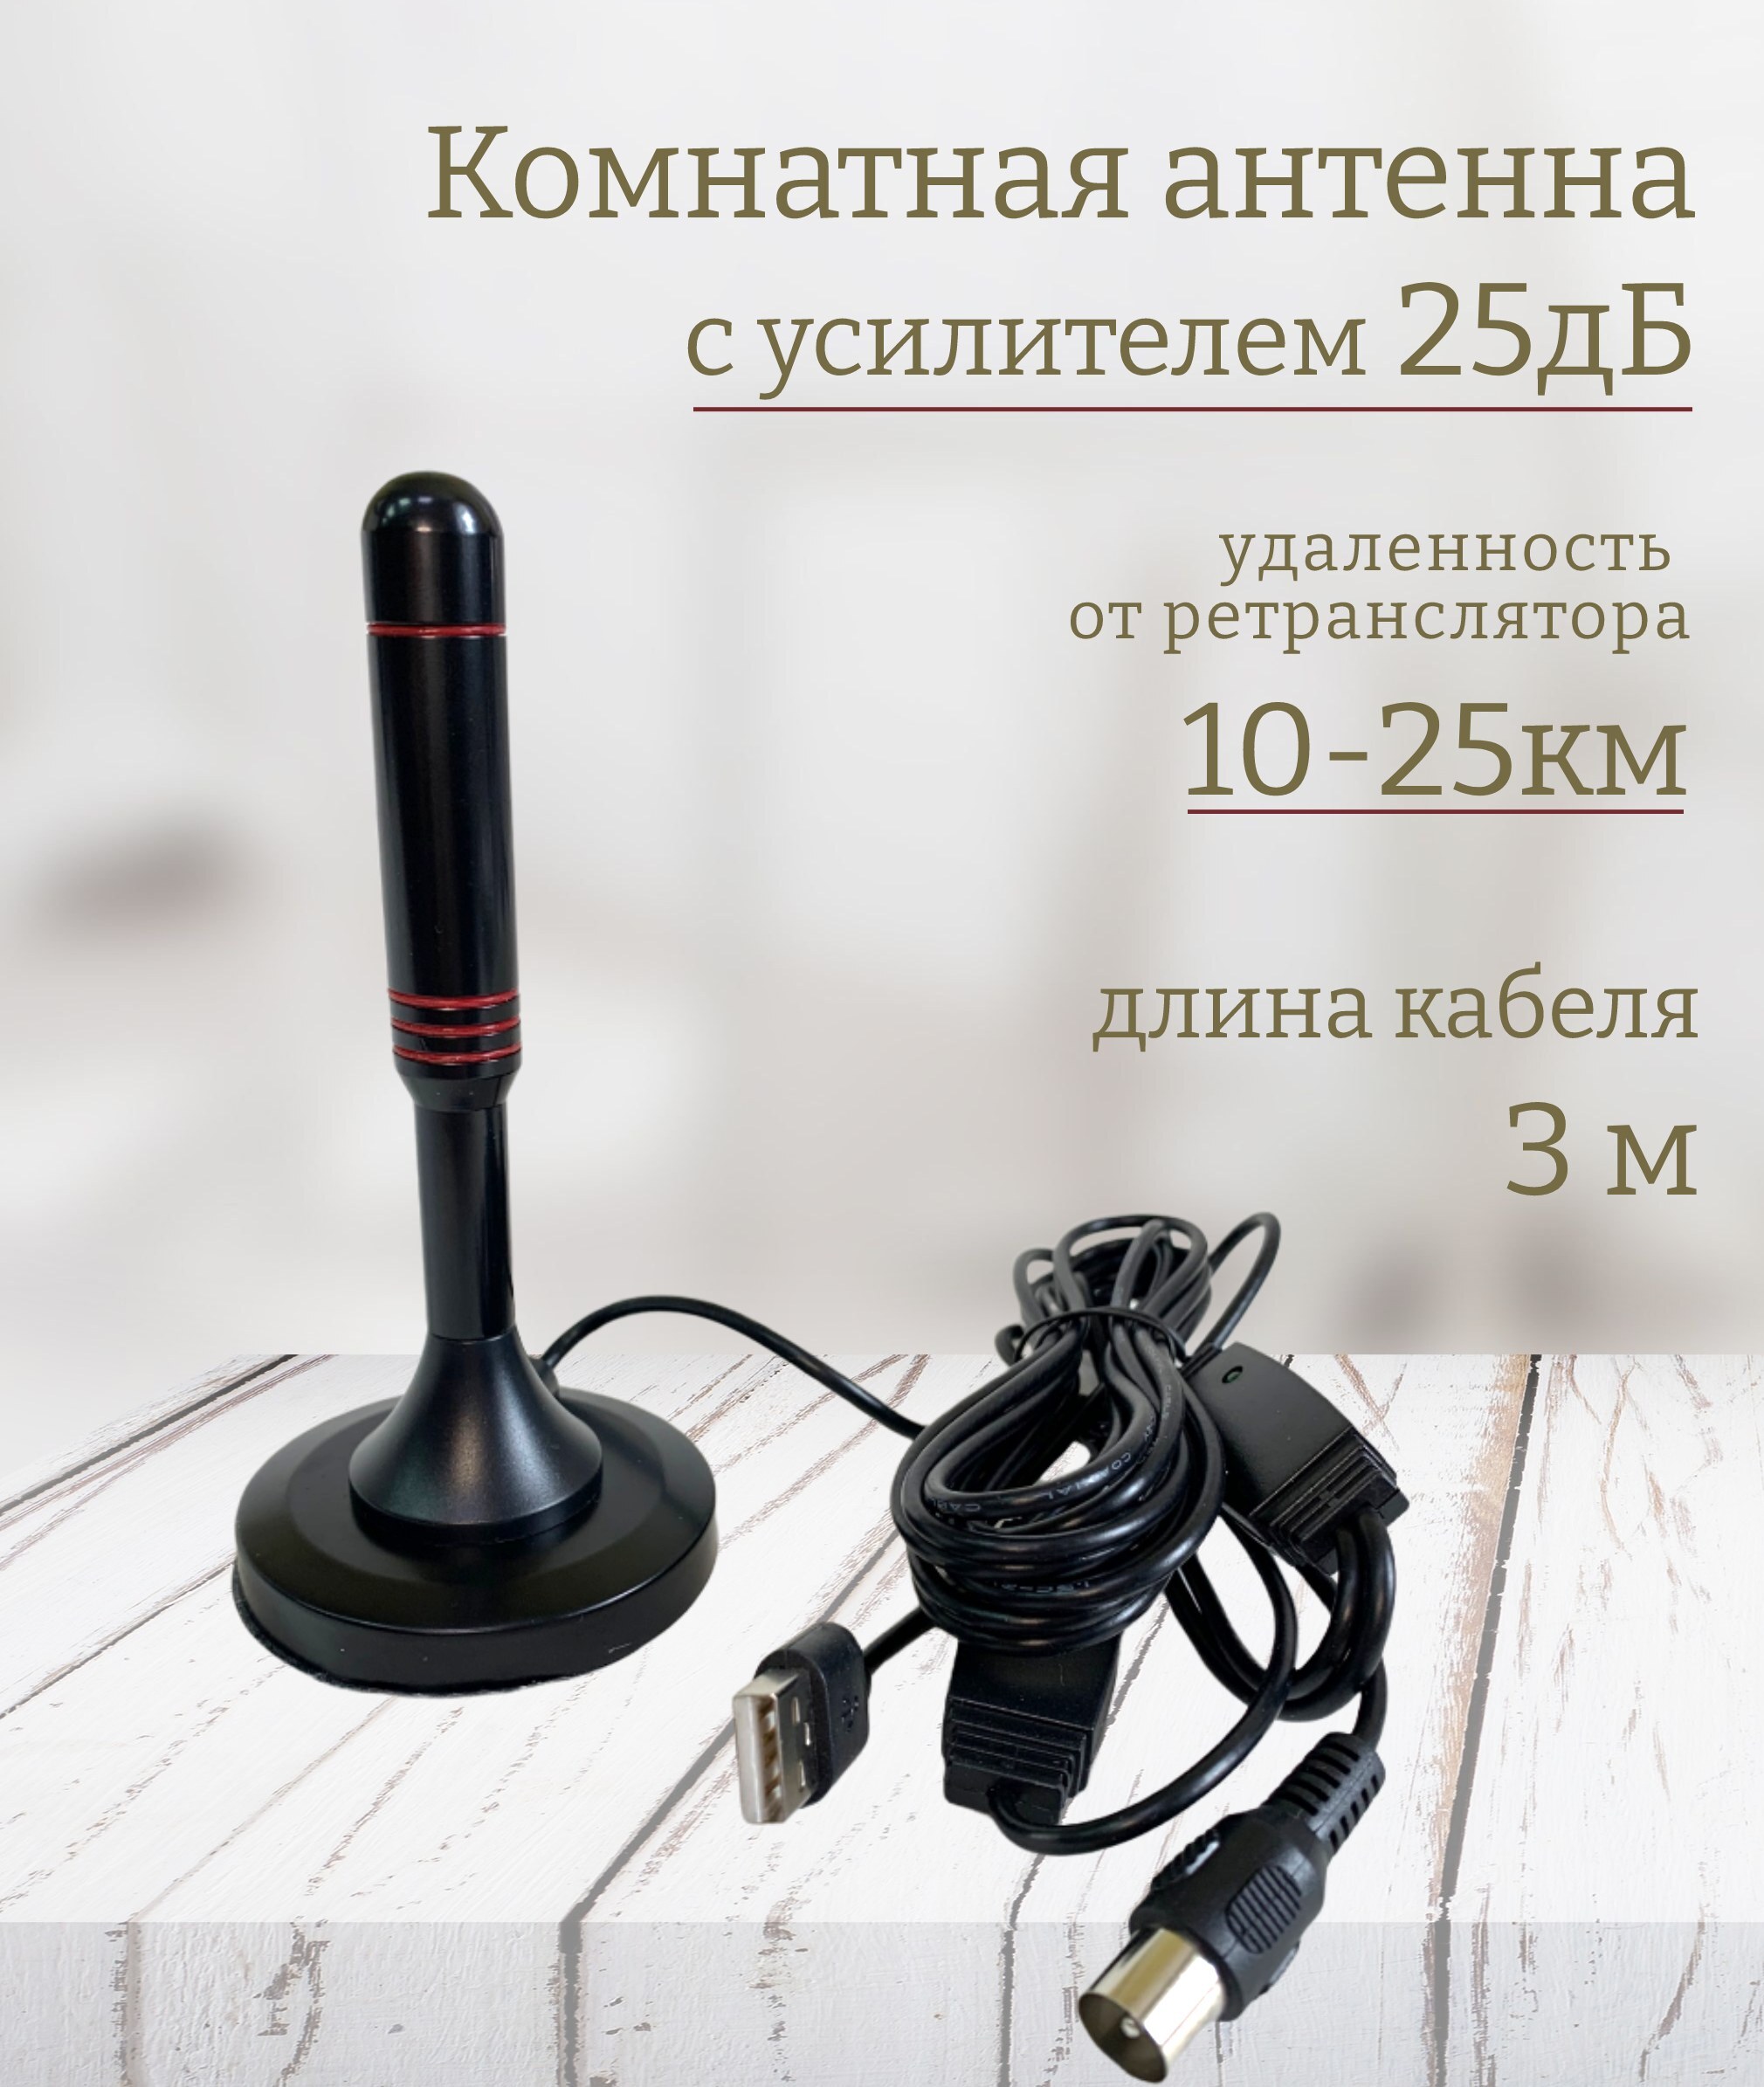 Антенна для телевизора на дачу - купить ТВ антенну для дачи в баштрен.рф